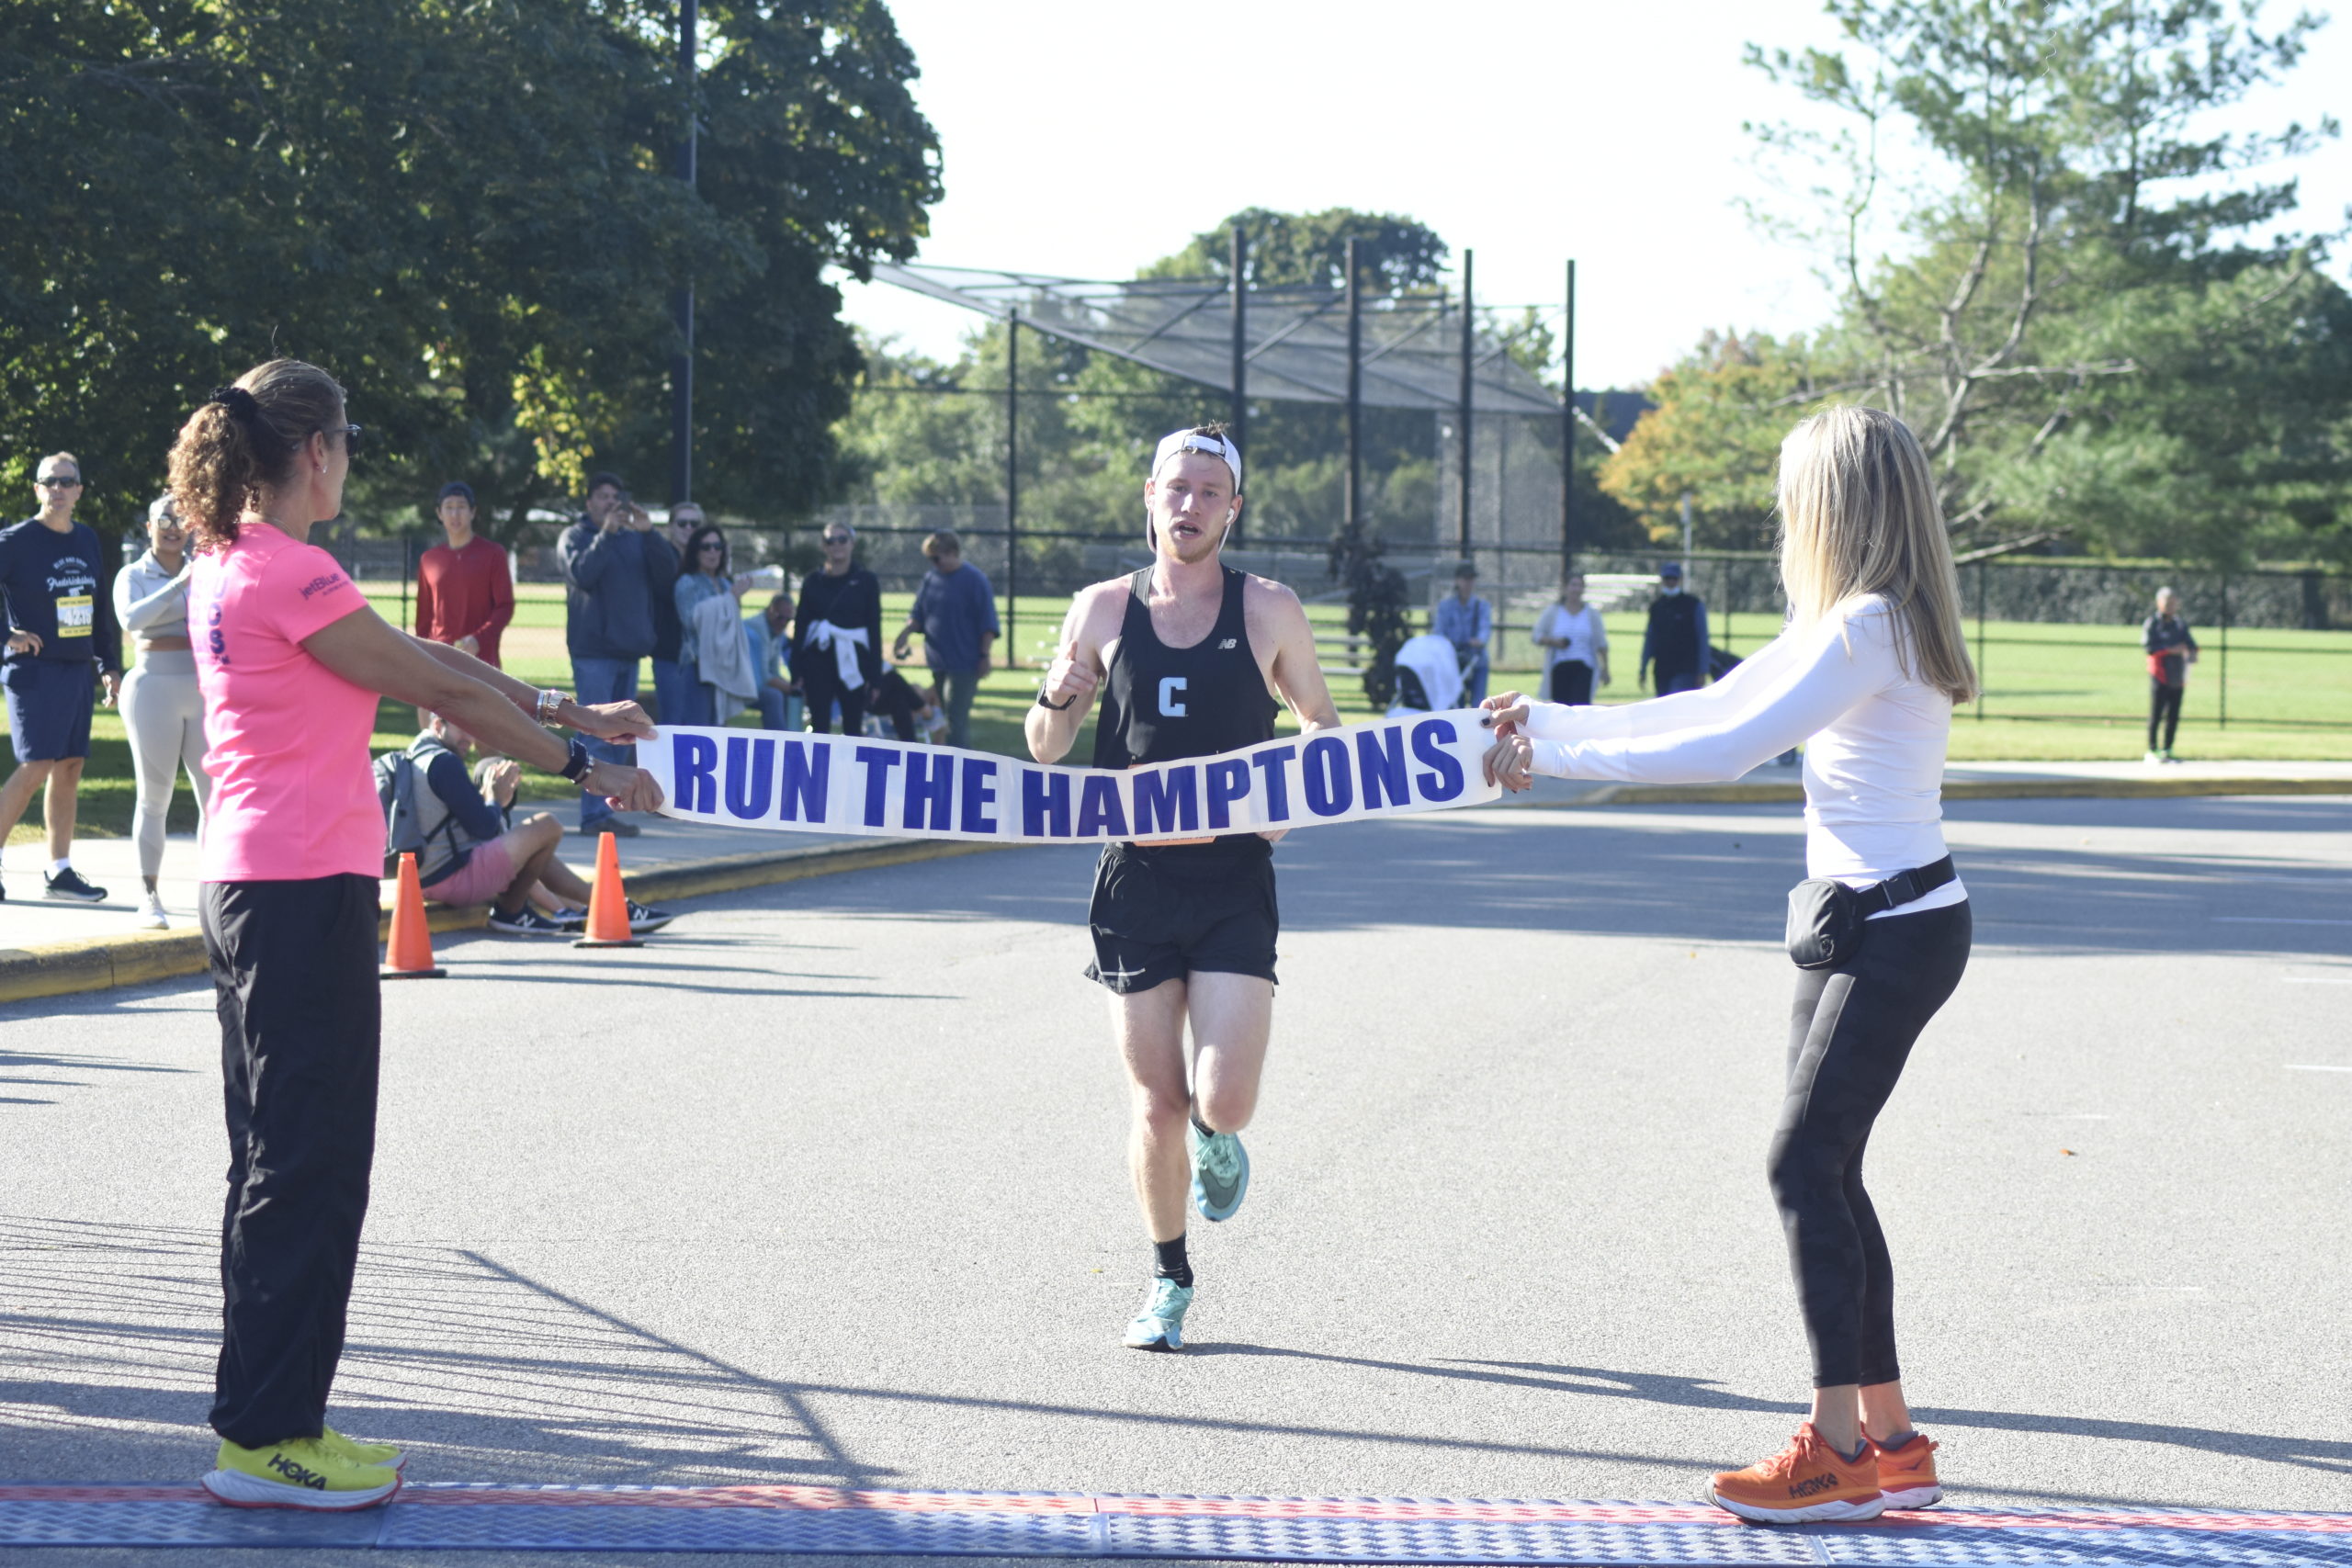 Jonah Hanig of Manhattan won the Hamptons Half Marathon on Saturday morning.